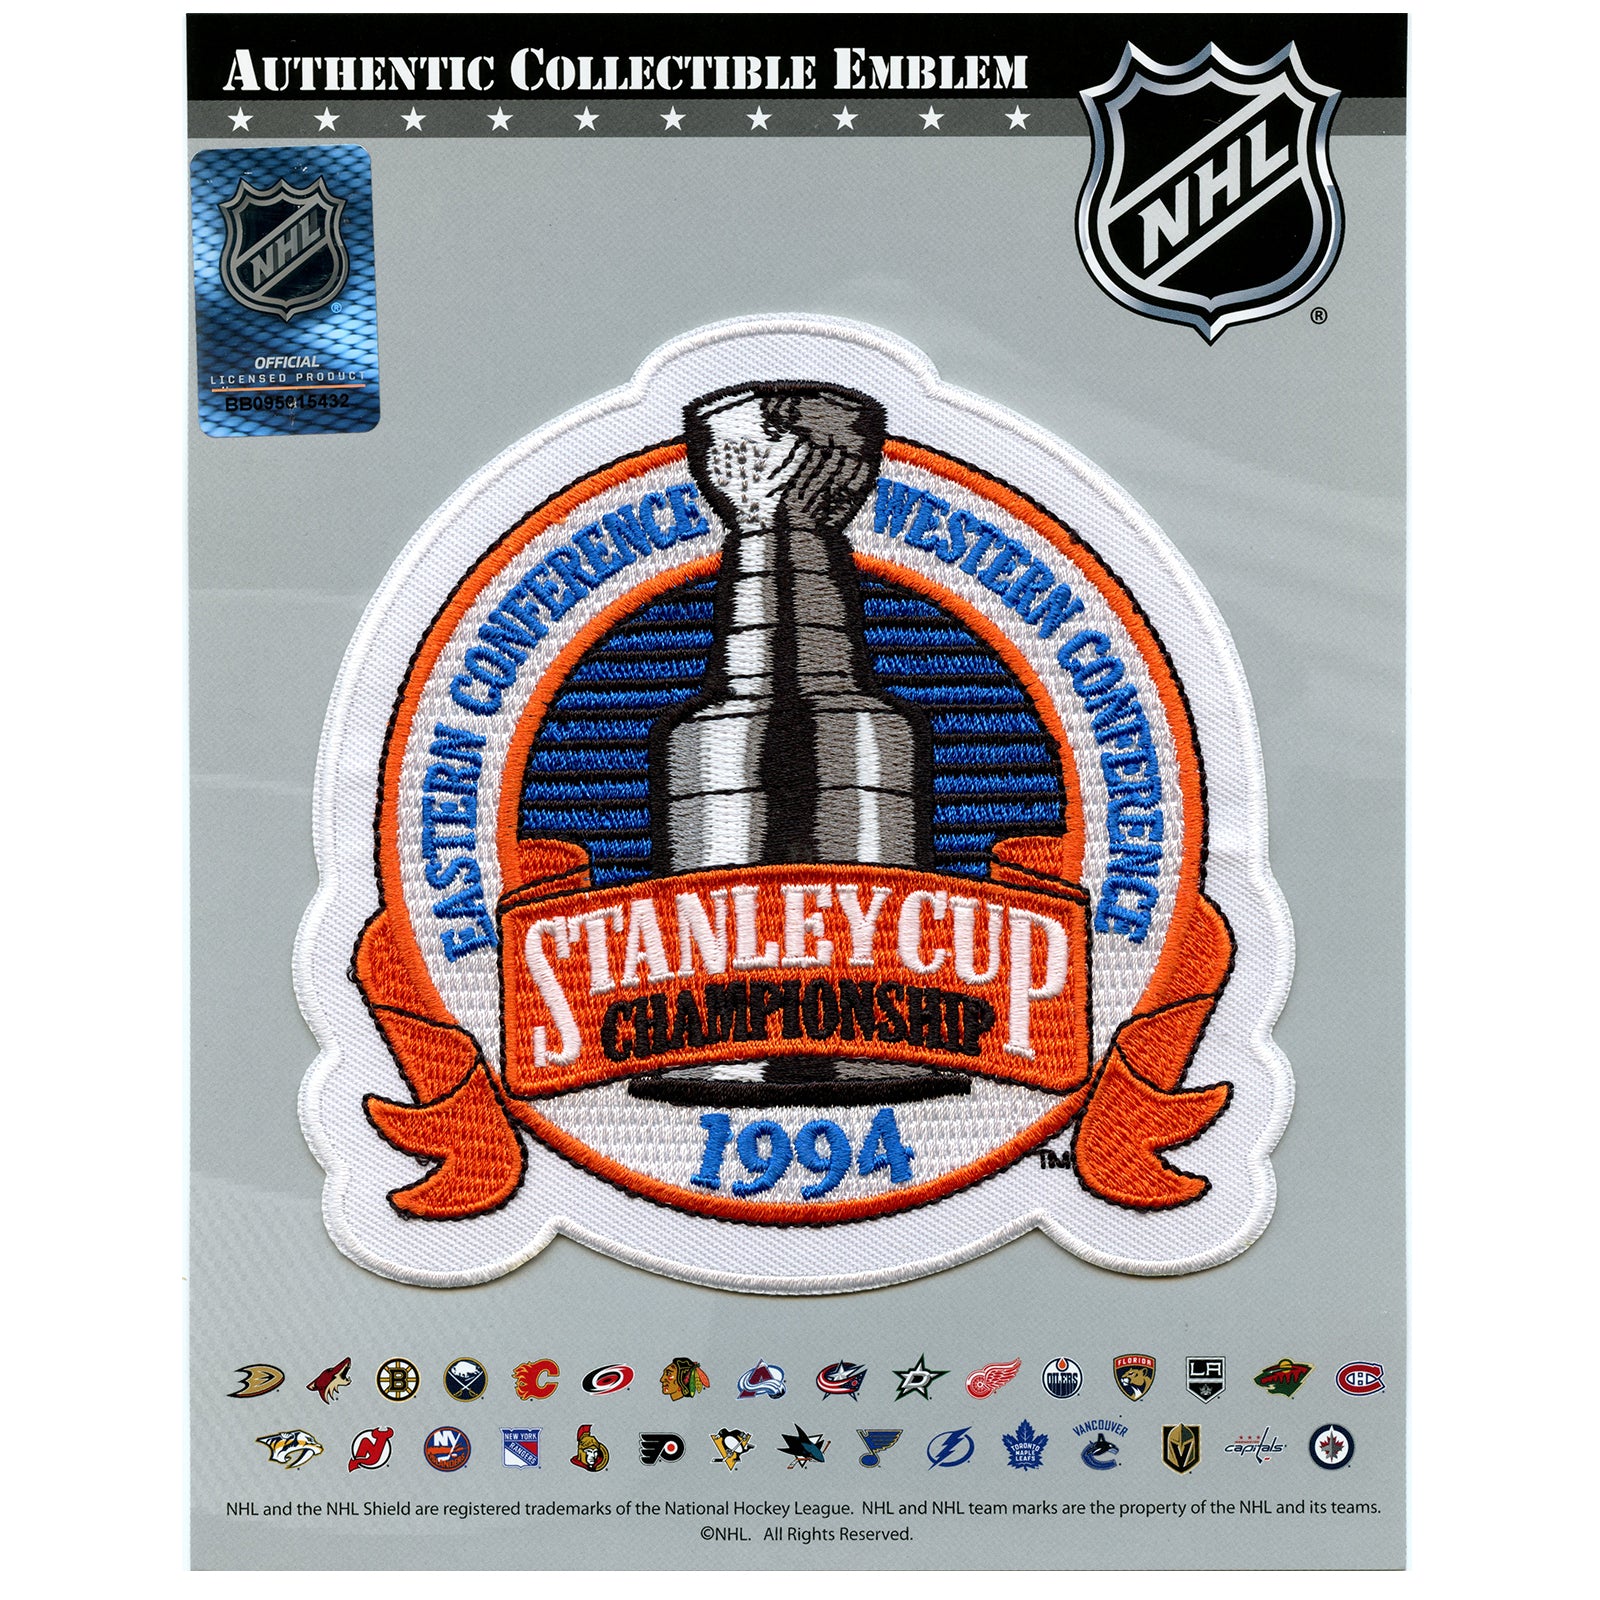 Vintage 1994 NHL New York Rangers “Stanley Cup